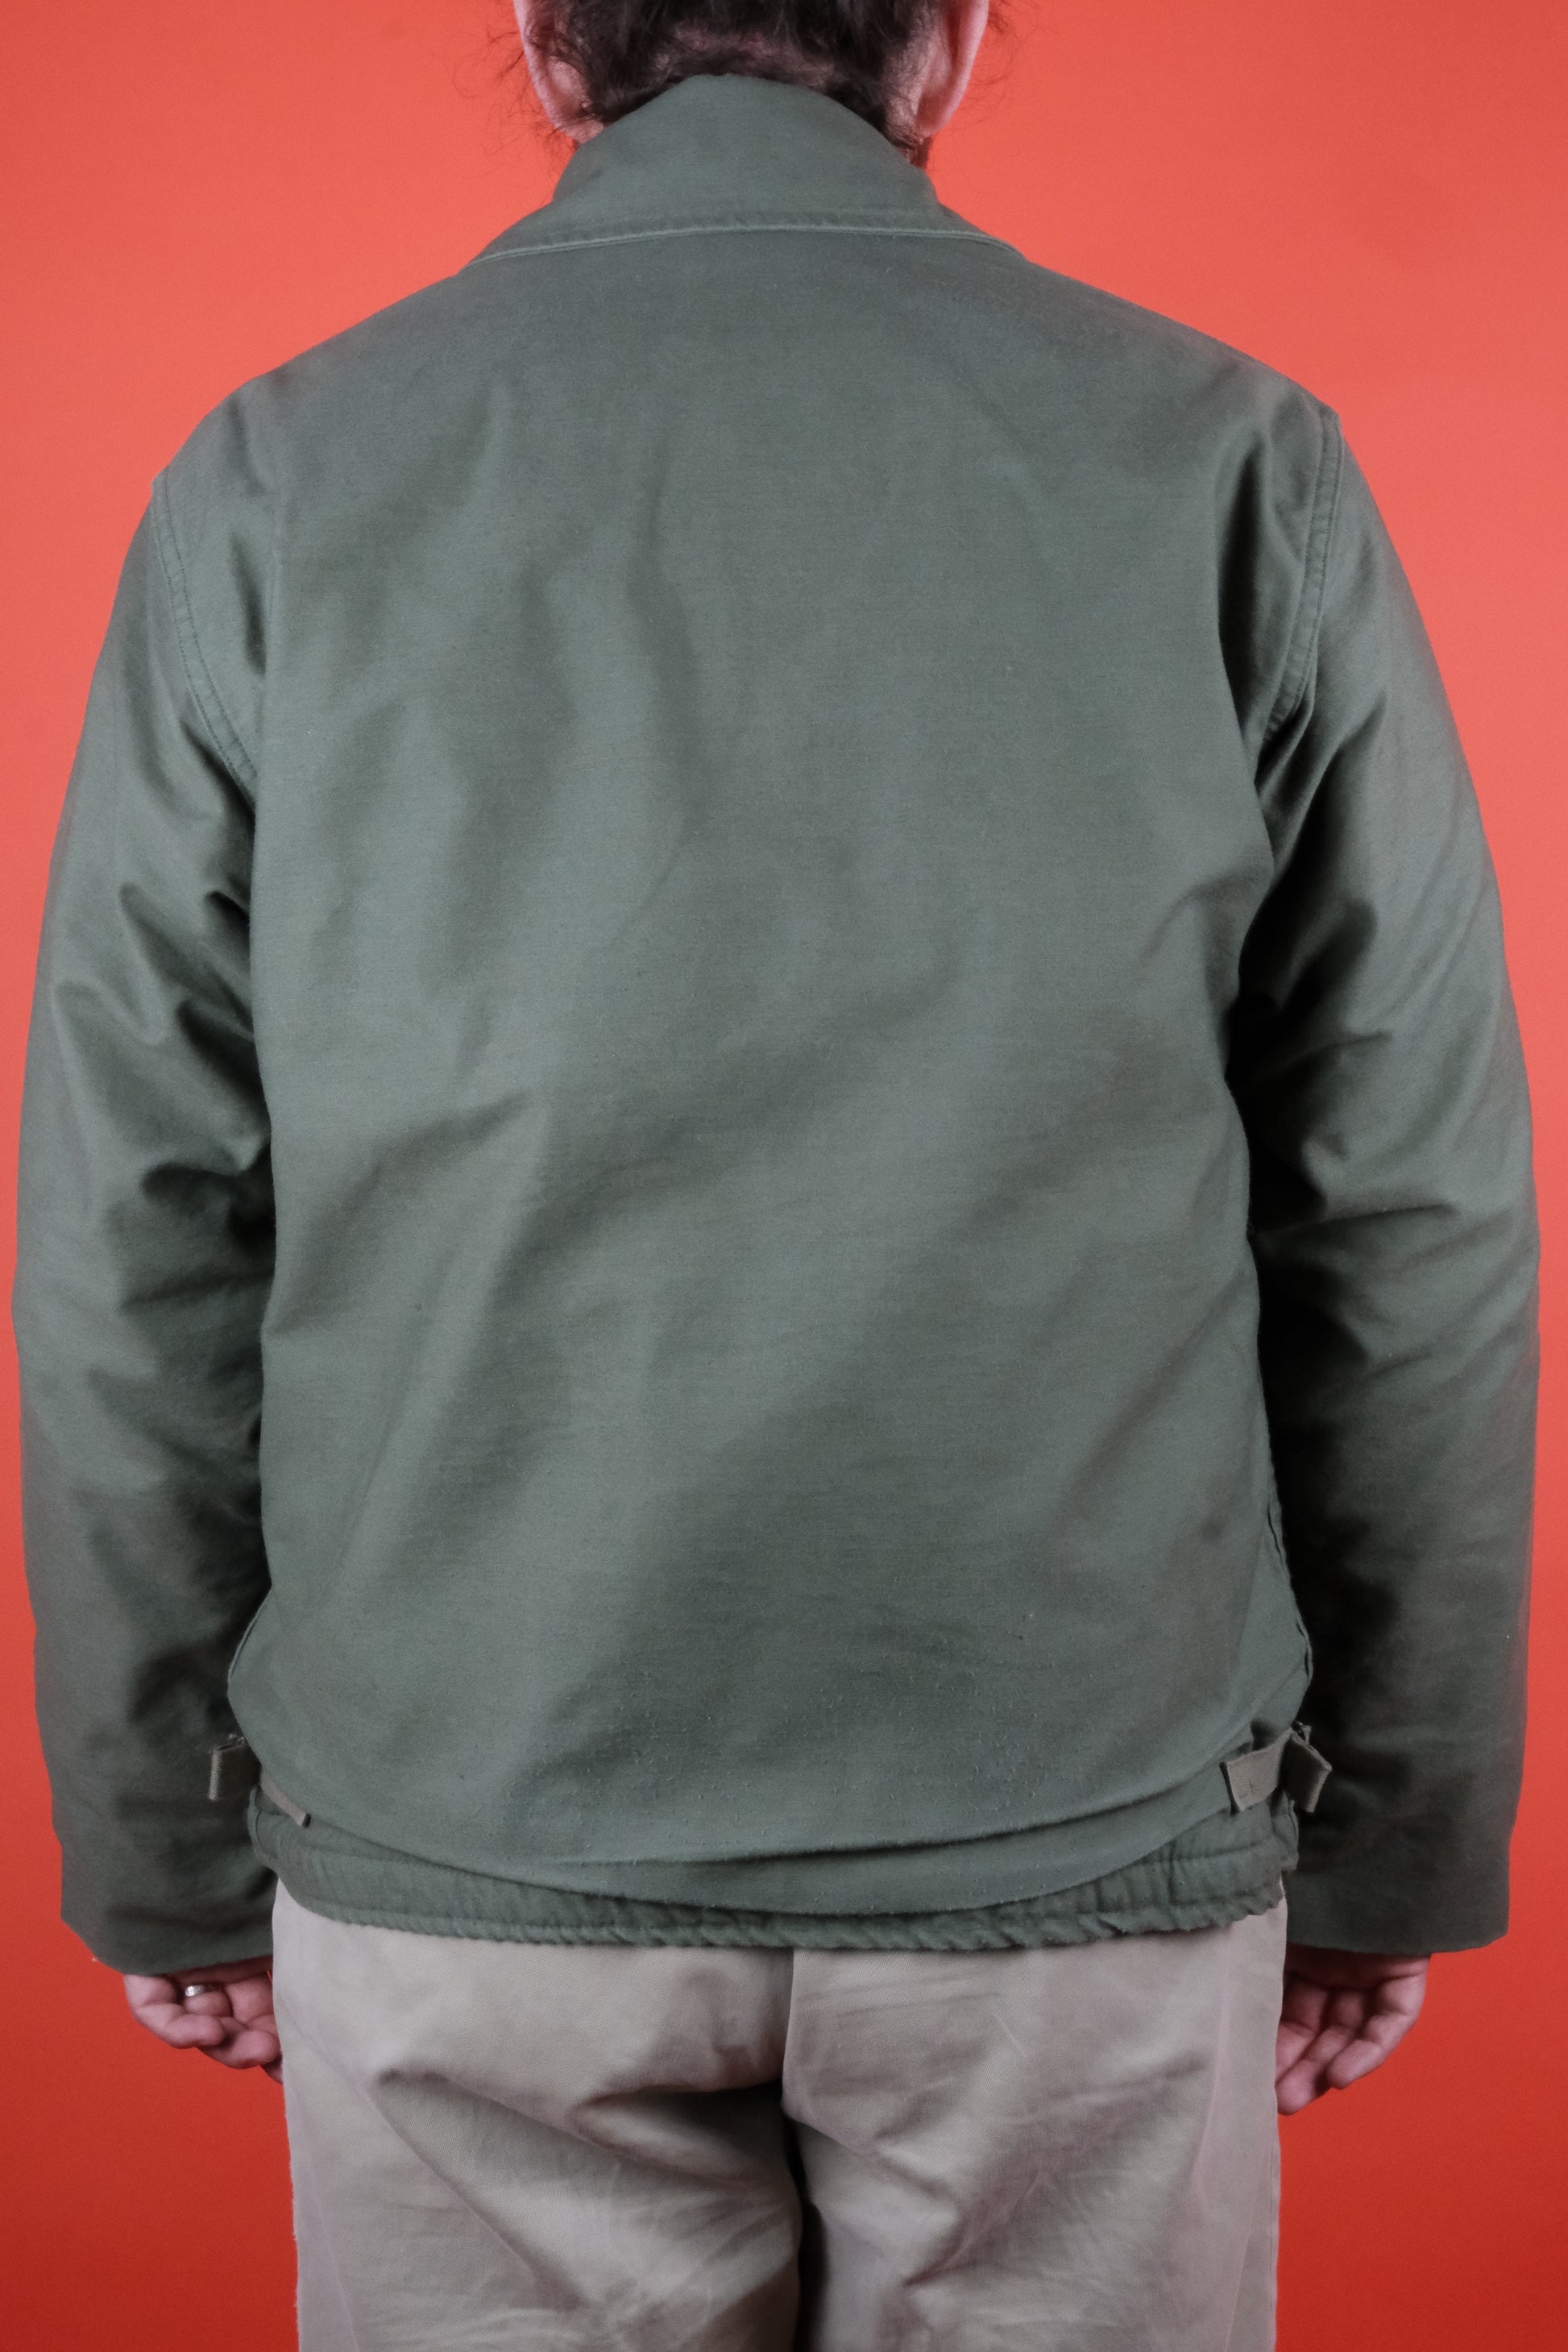 a2 deck jacket - Vintage clothing clochard92.com